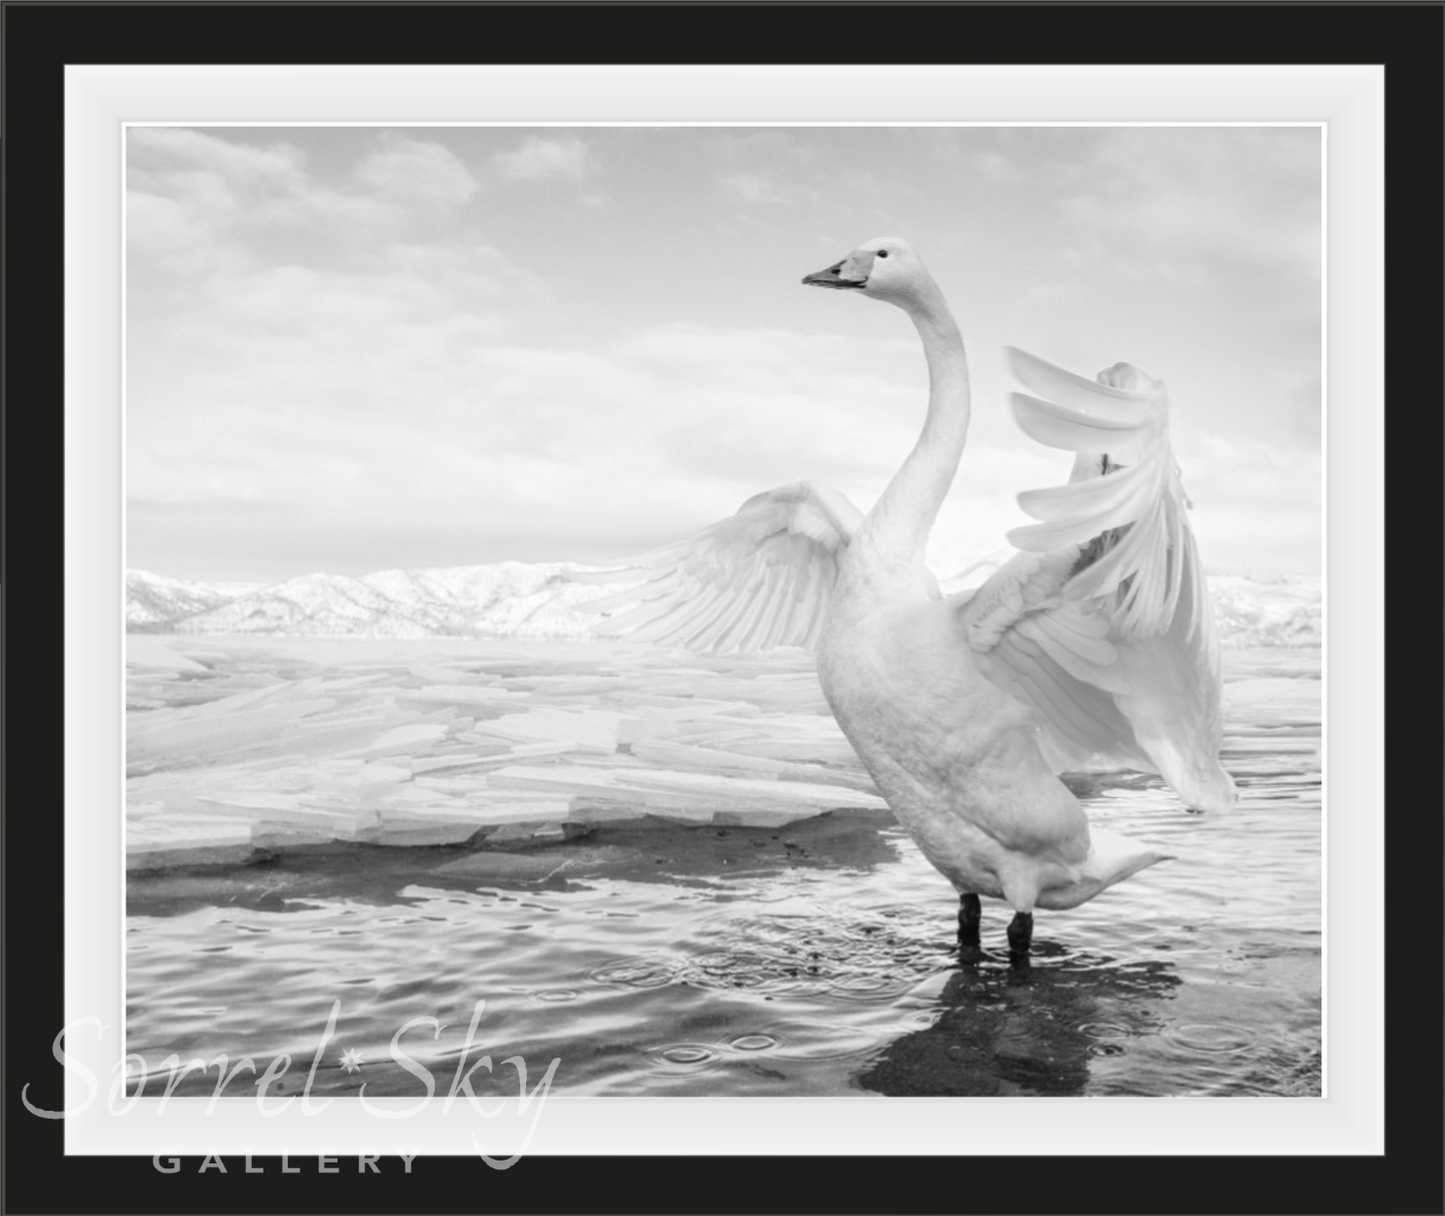 SWAN LAKE-Photographic Print-David Yarrow-Sorrel Sky Gallery